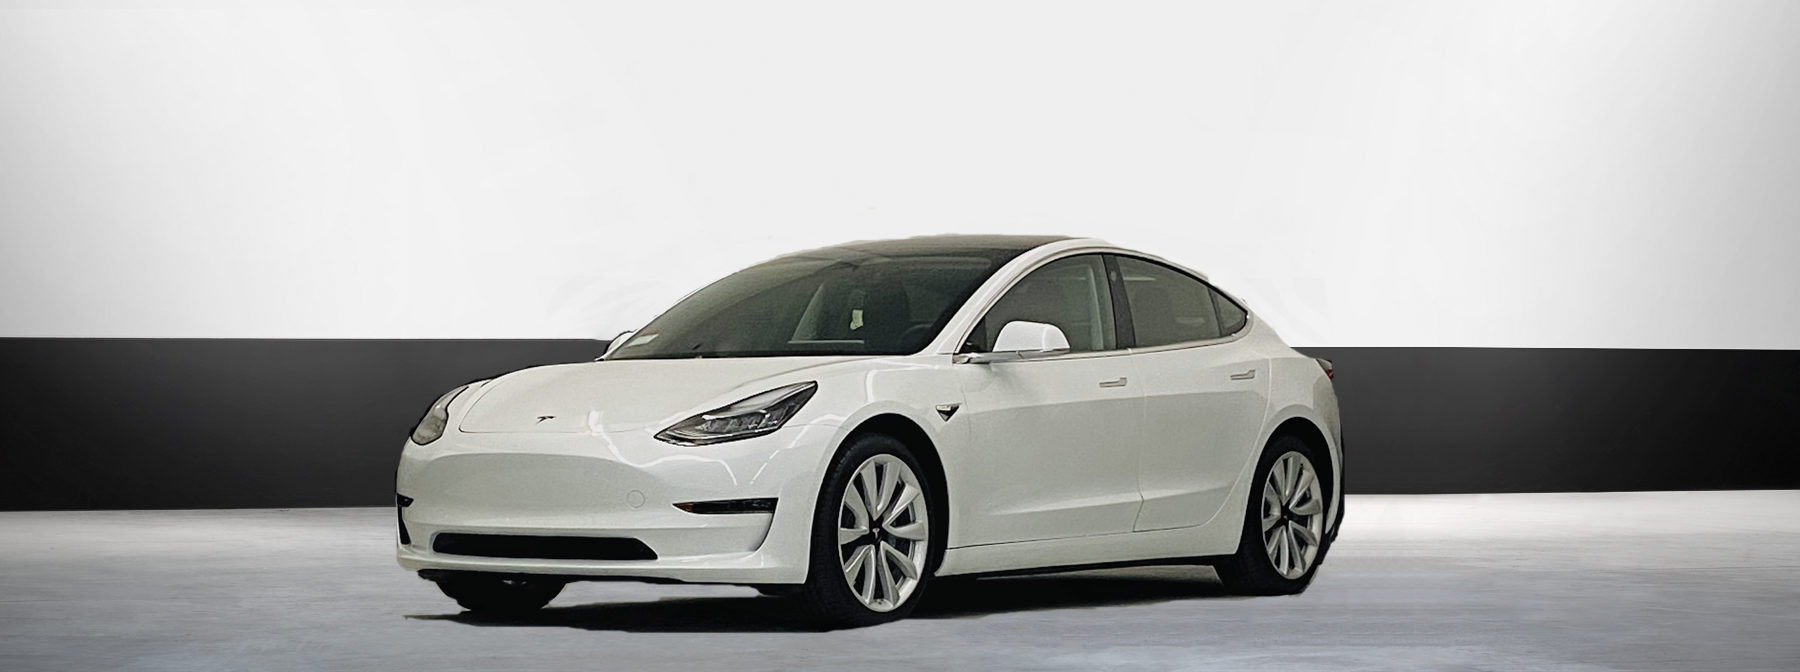 Tesla rental model 3 white exterior electric car rental